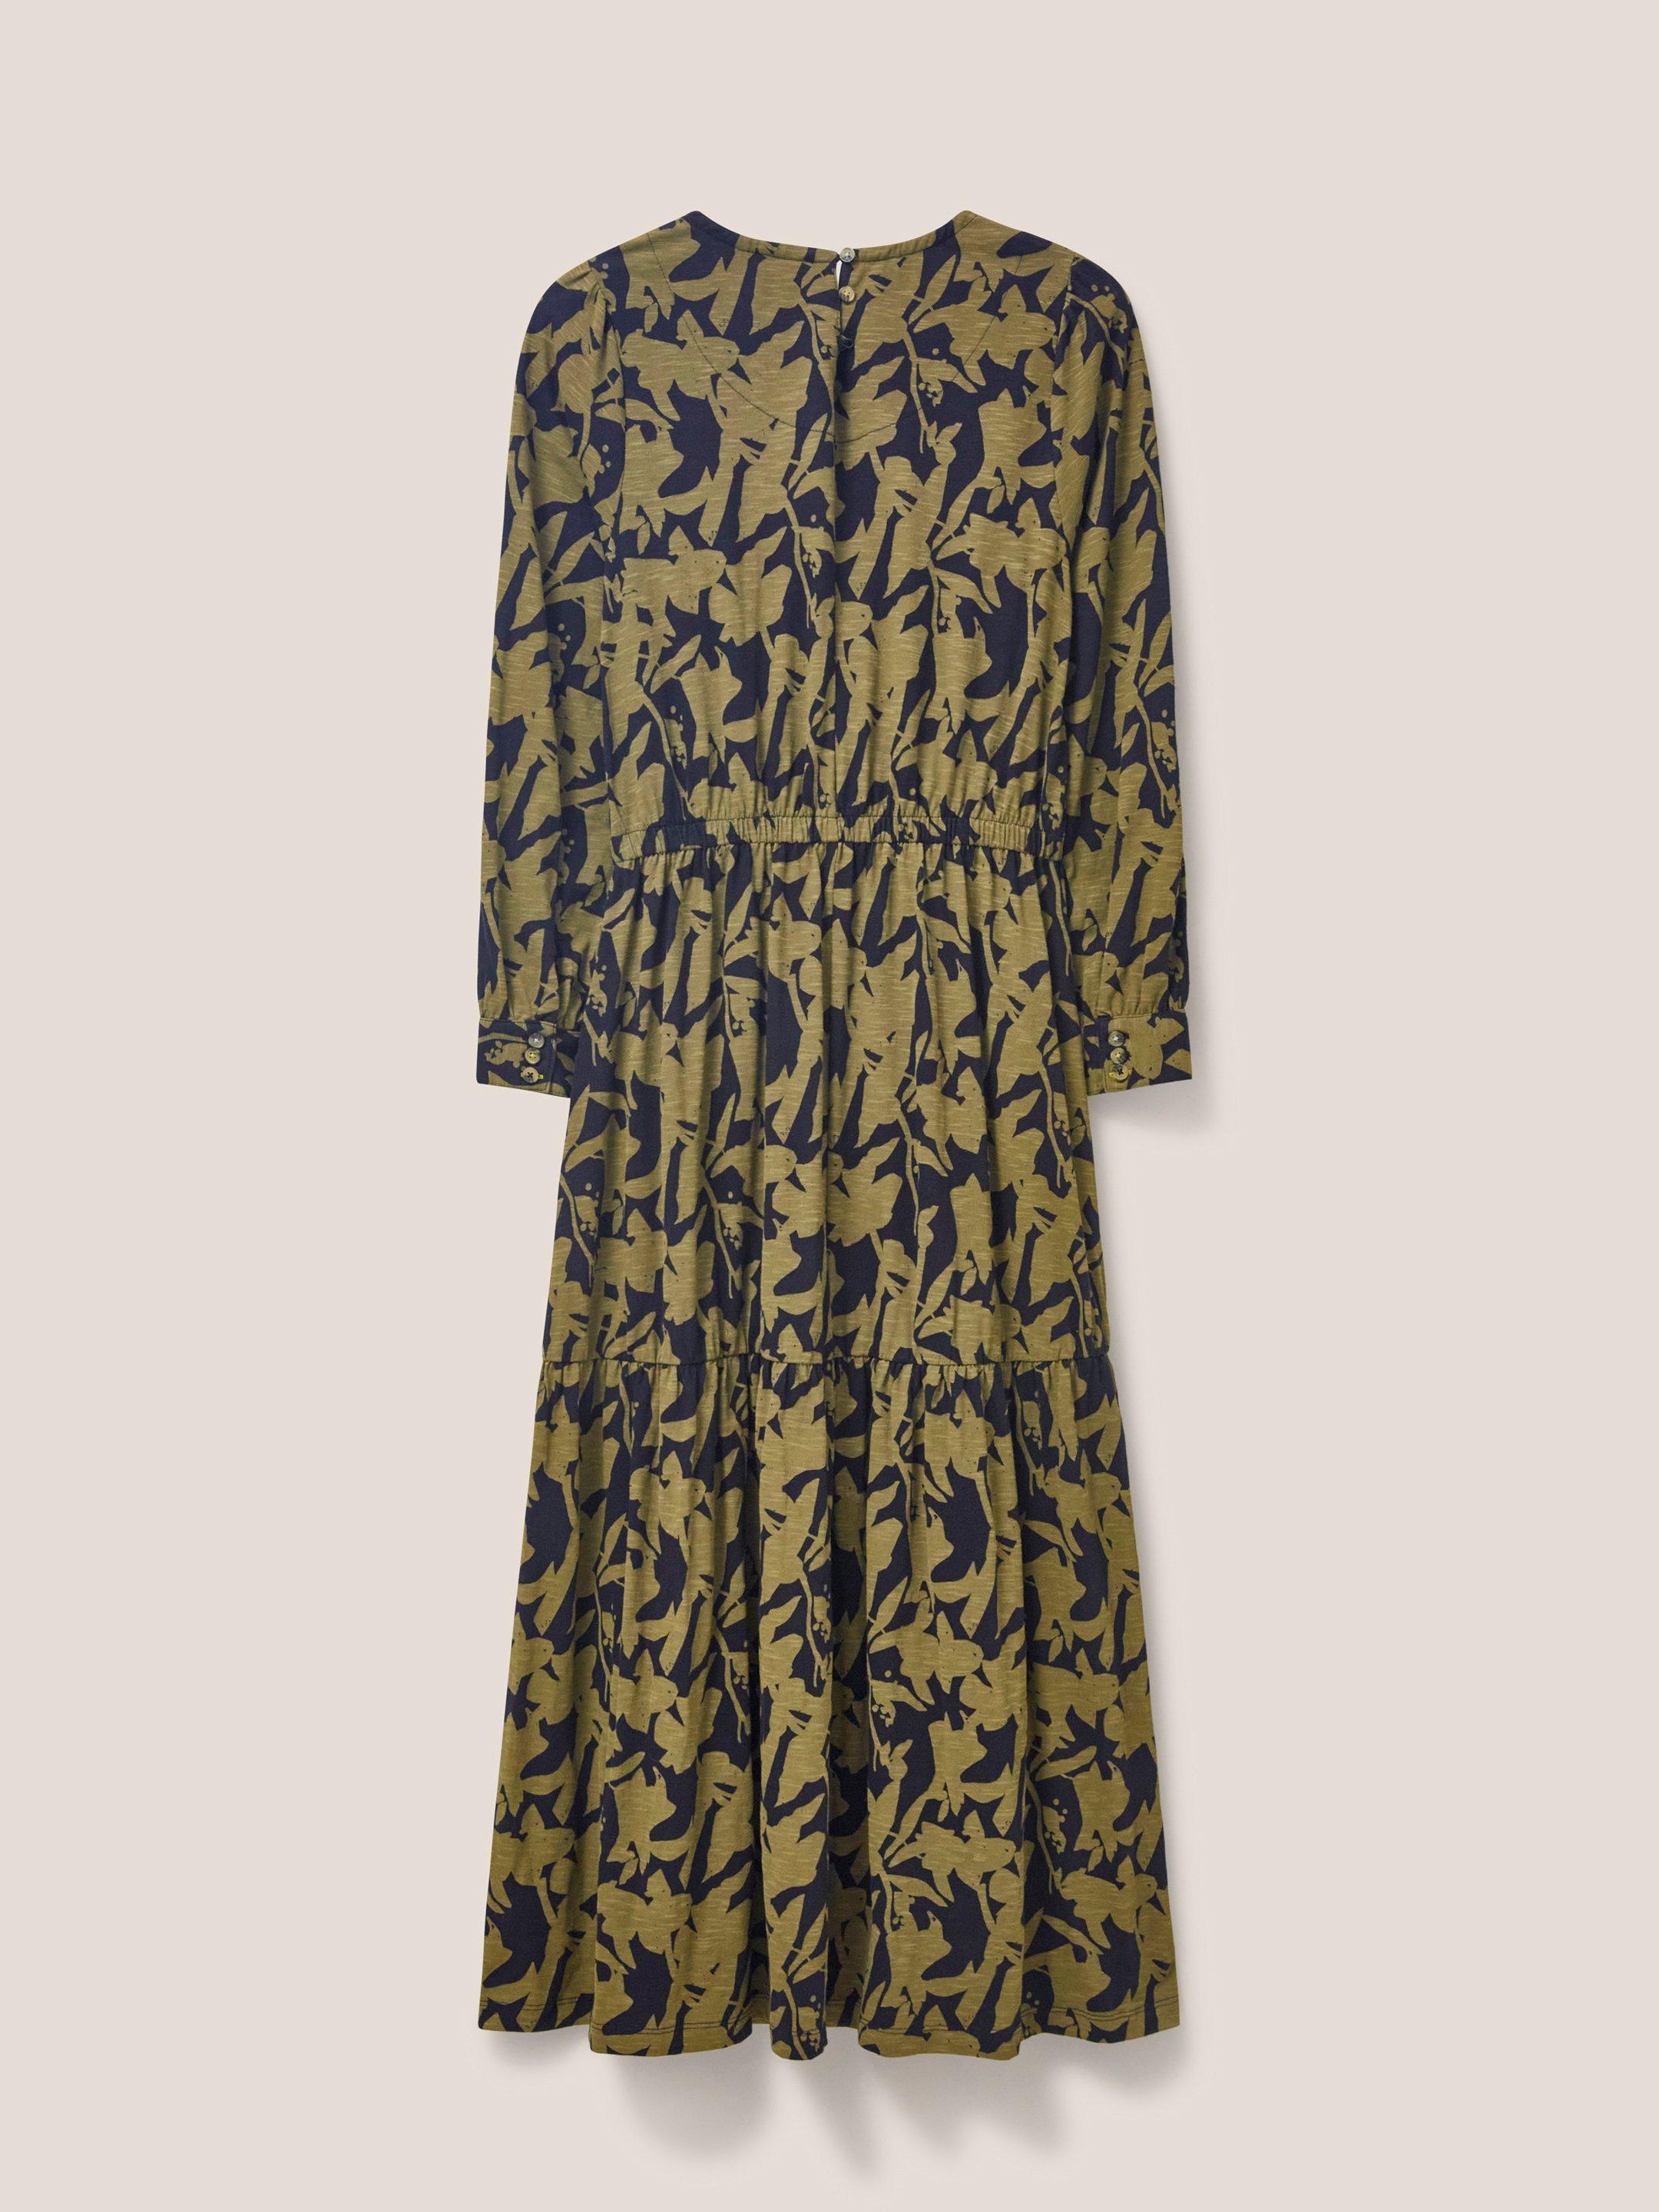 Olive Jersey Dress in BLK MLT - FLAT BACK